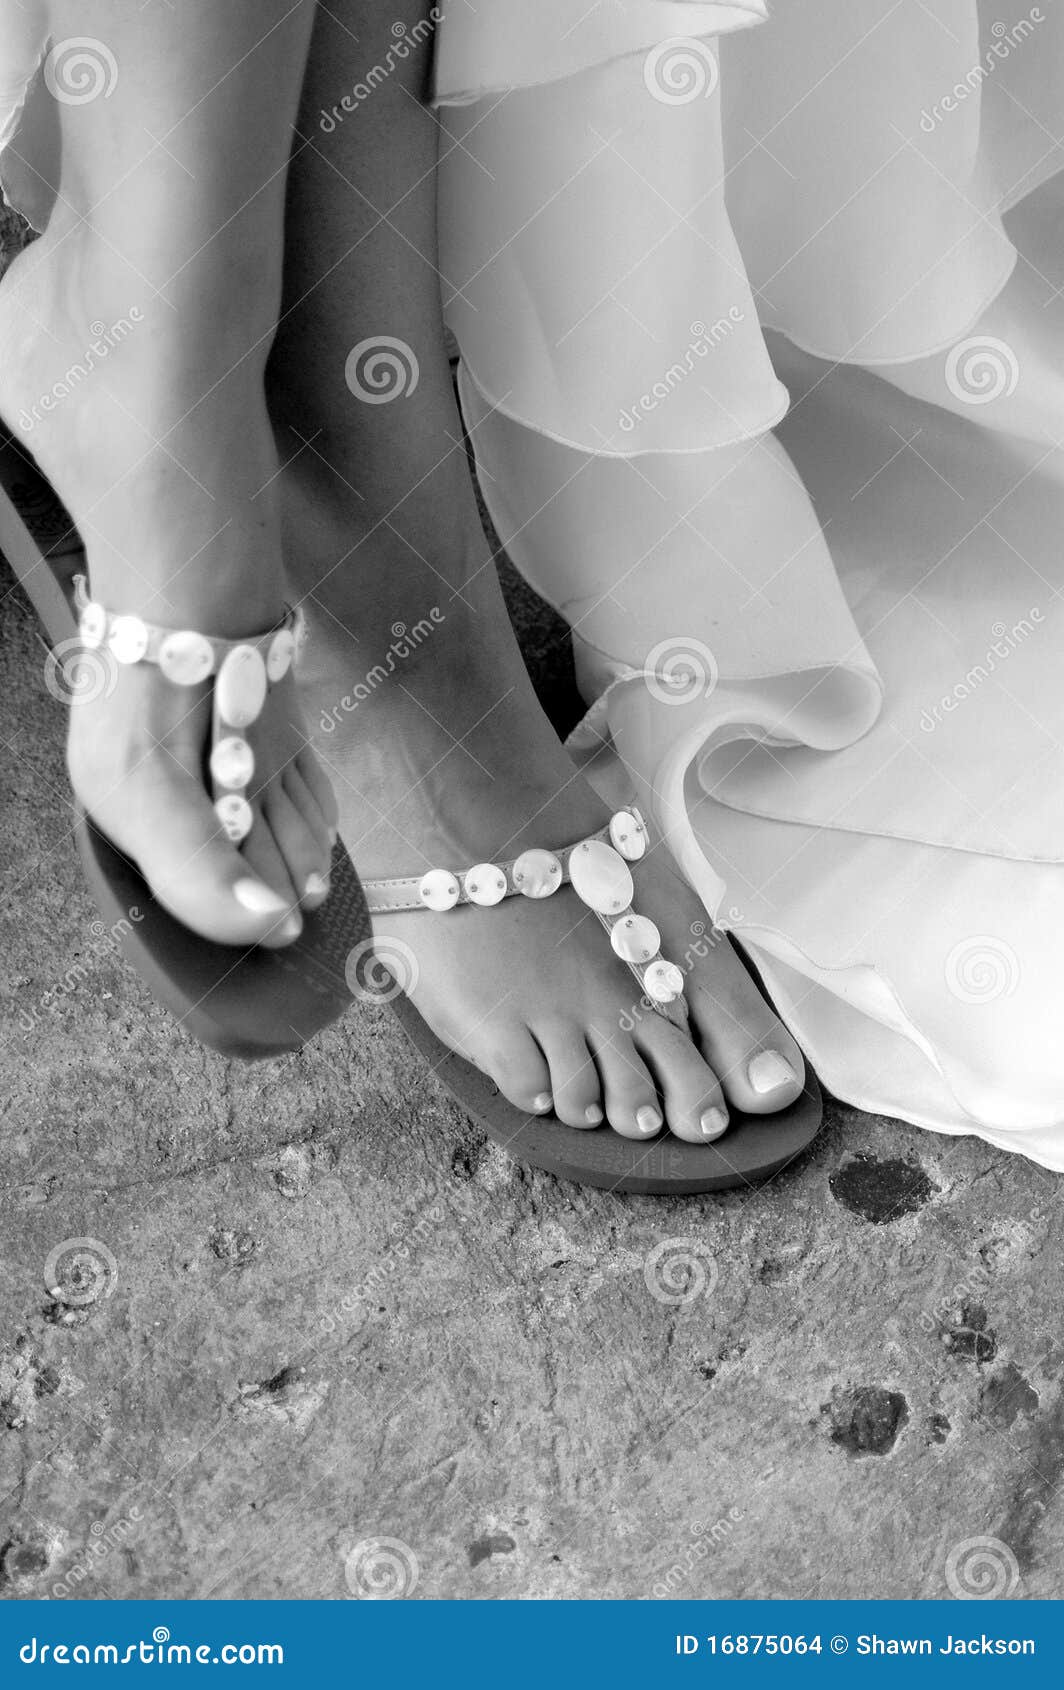 sandals on bride's feet